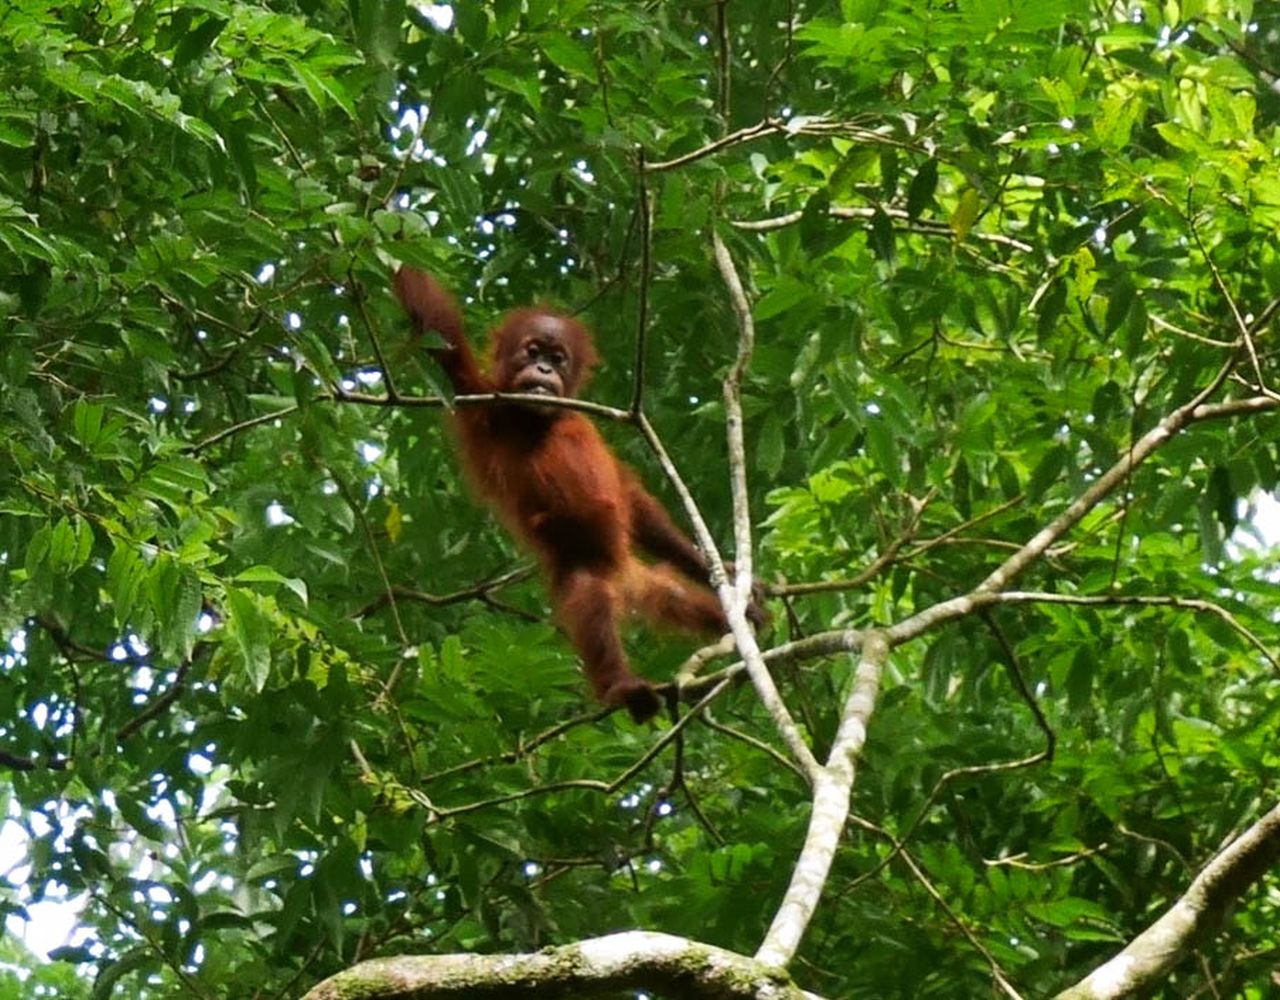 Cesta okolo sveta - Indonézia, džungla, orangutany, Vianoce